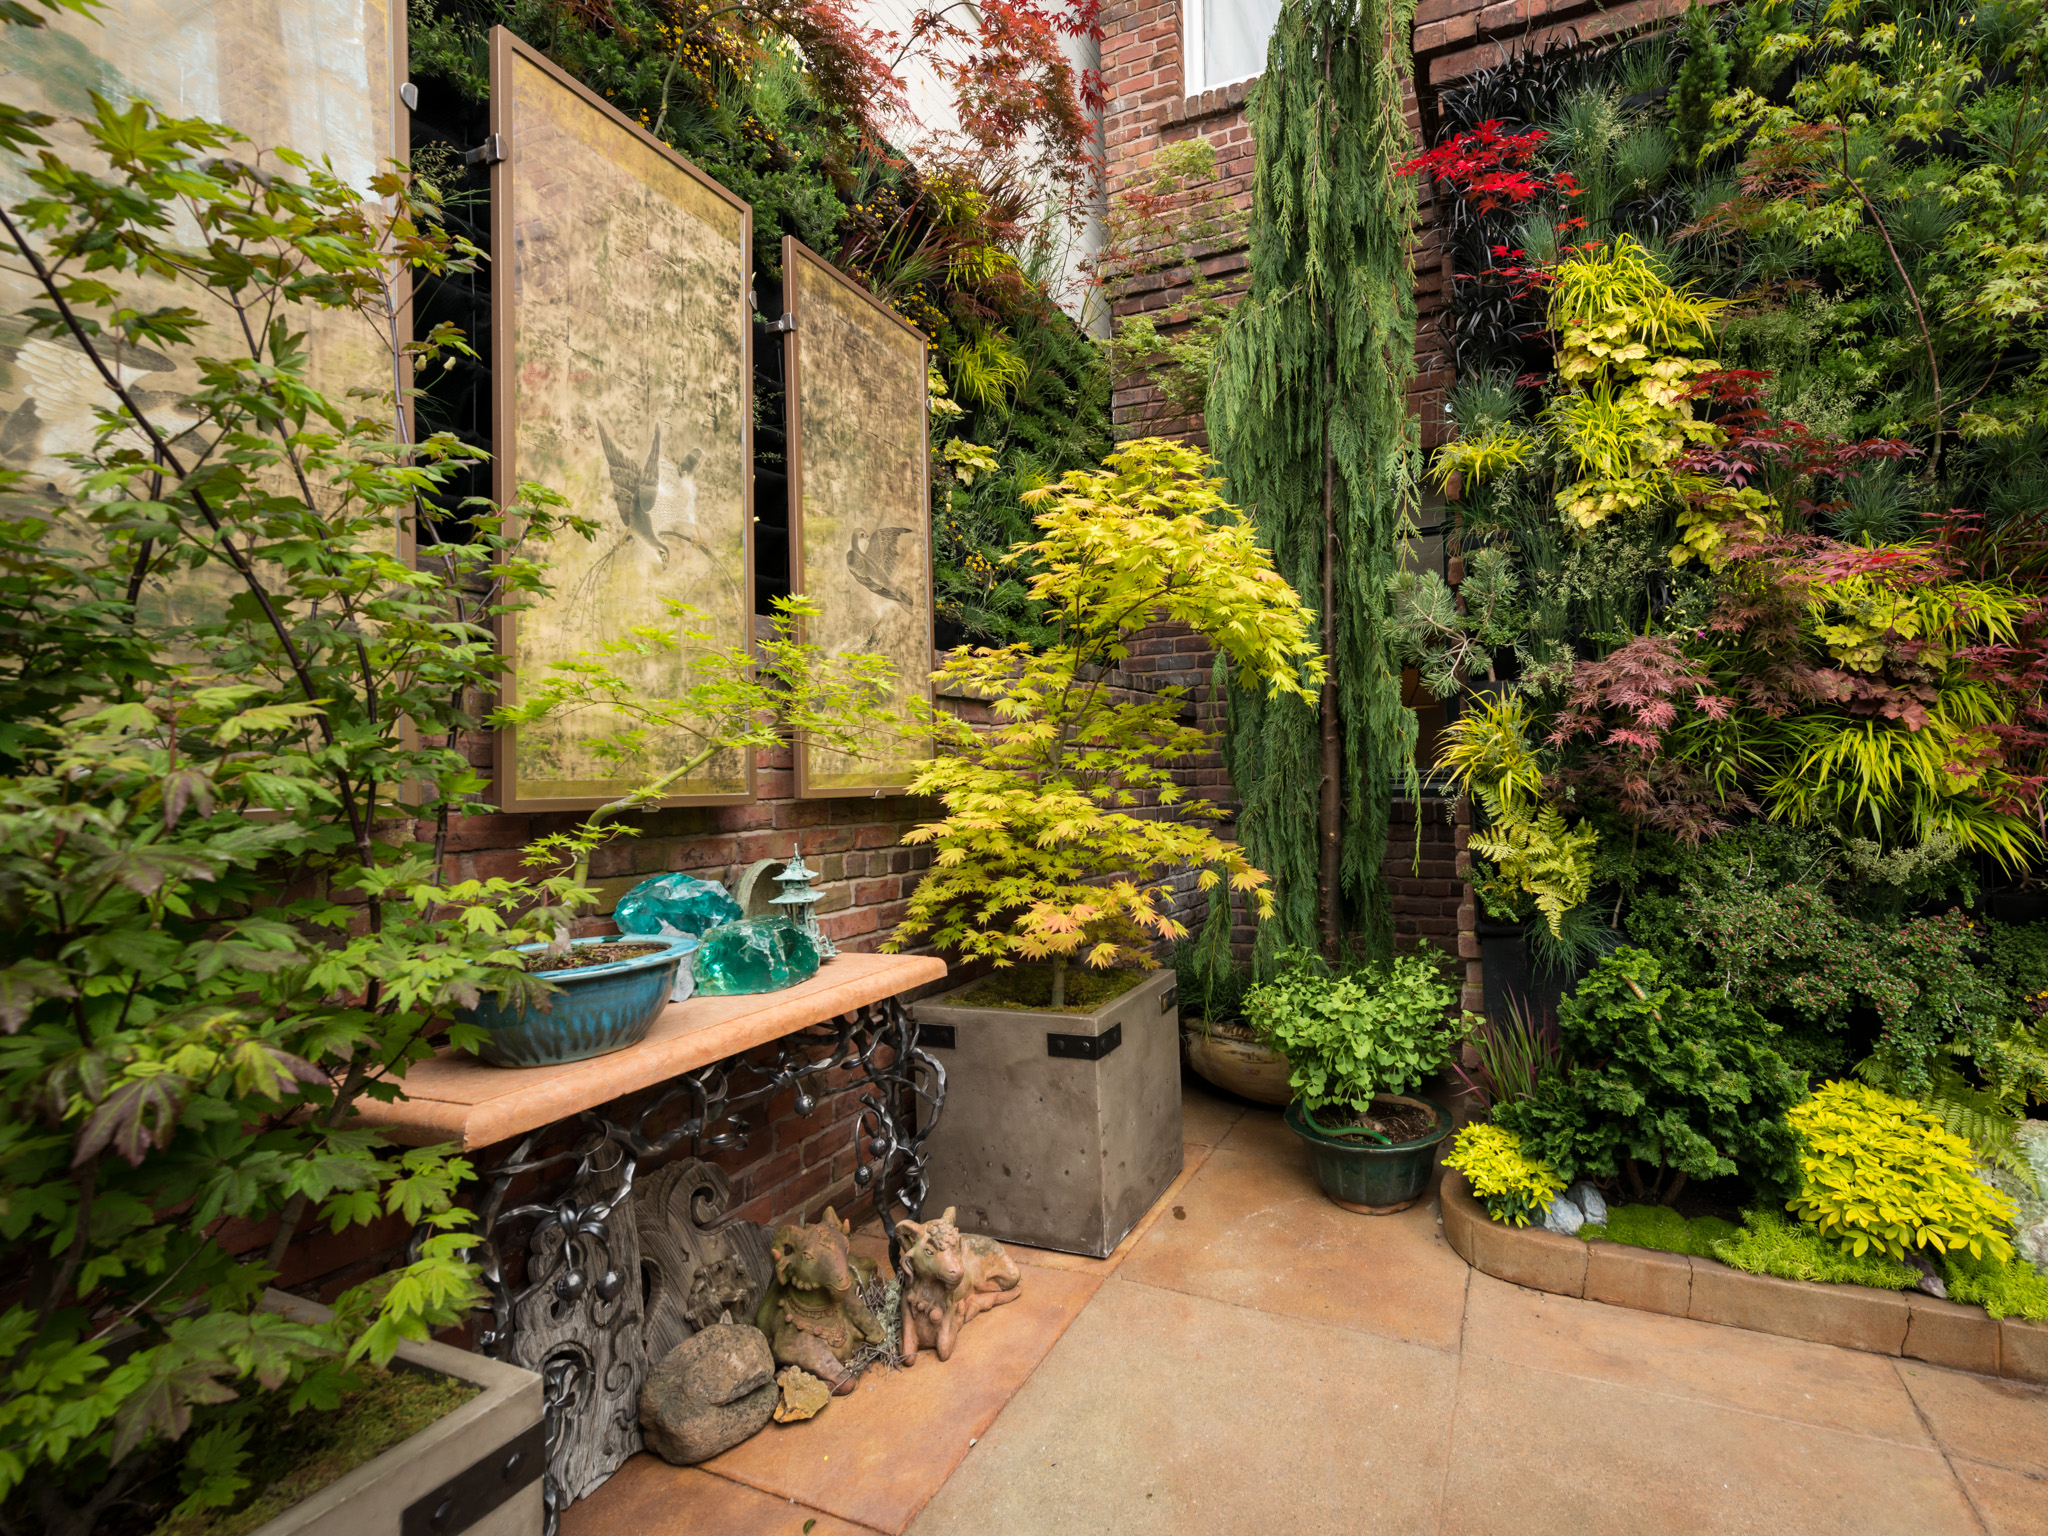 Yvetti 100Pcs Purple Marigold Seeds Easy to Grow Plant Home Landscape Ornaments DIY Bonsai Decor Garden Courtyard Home Office 